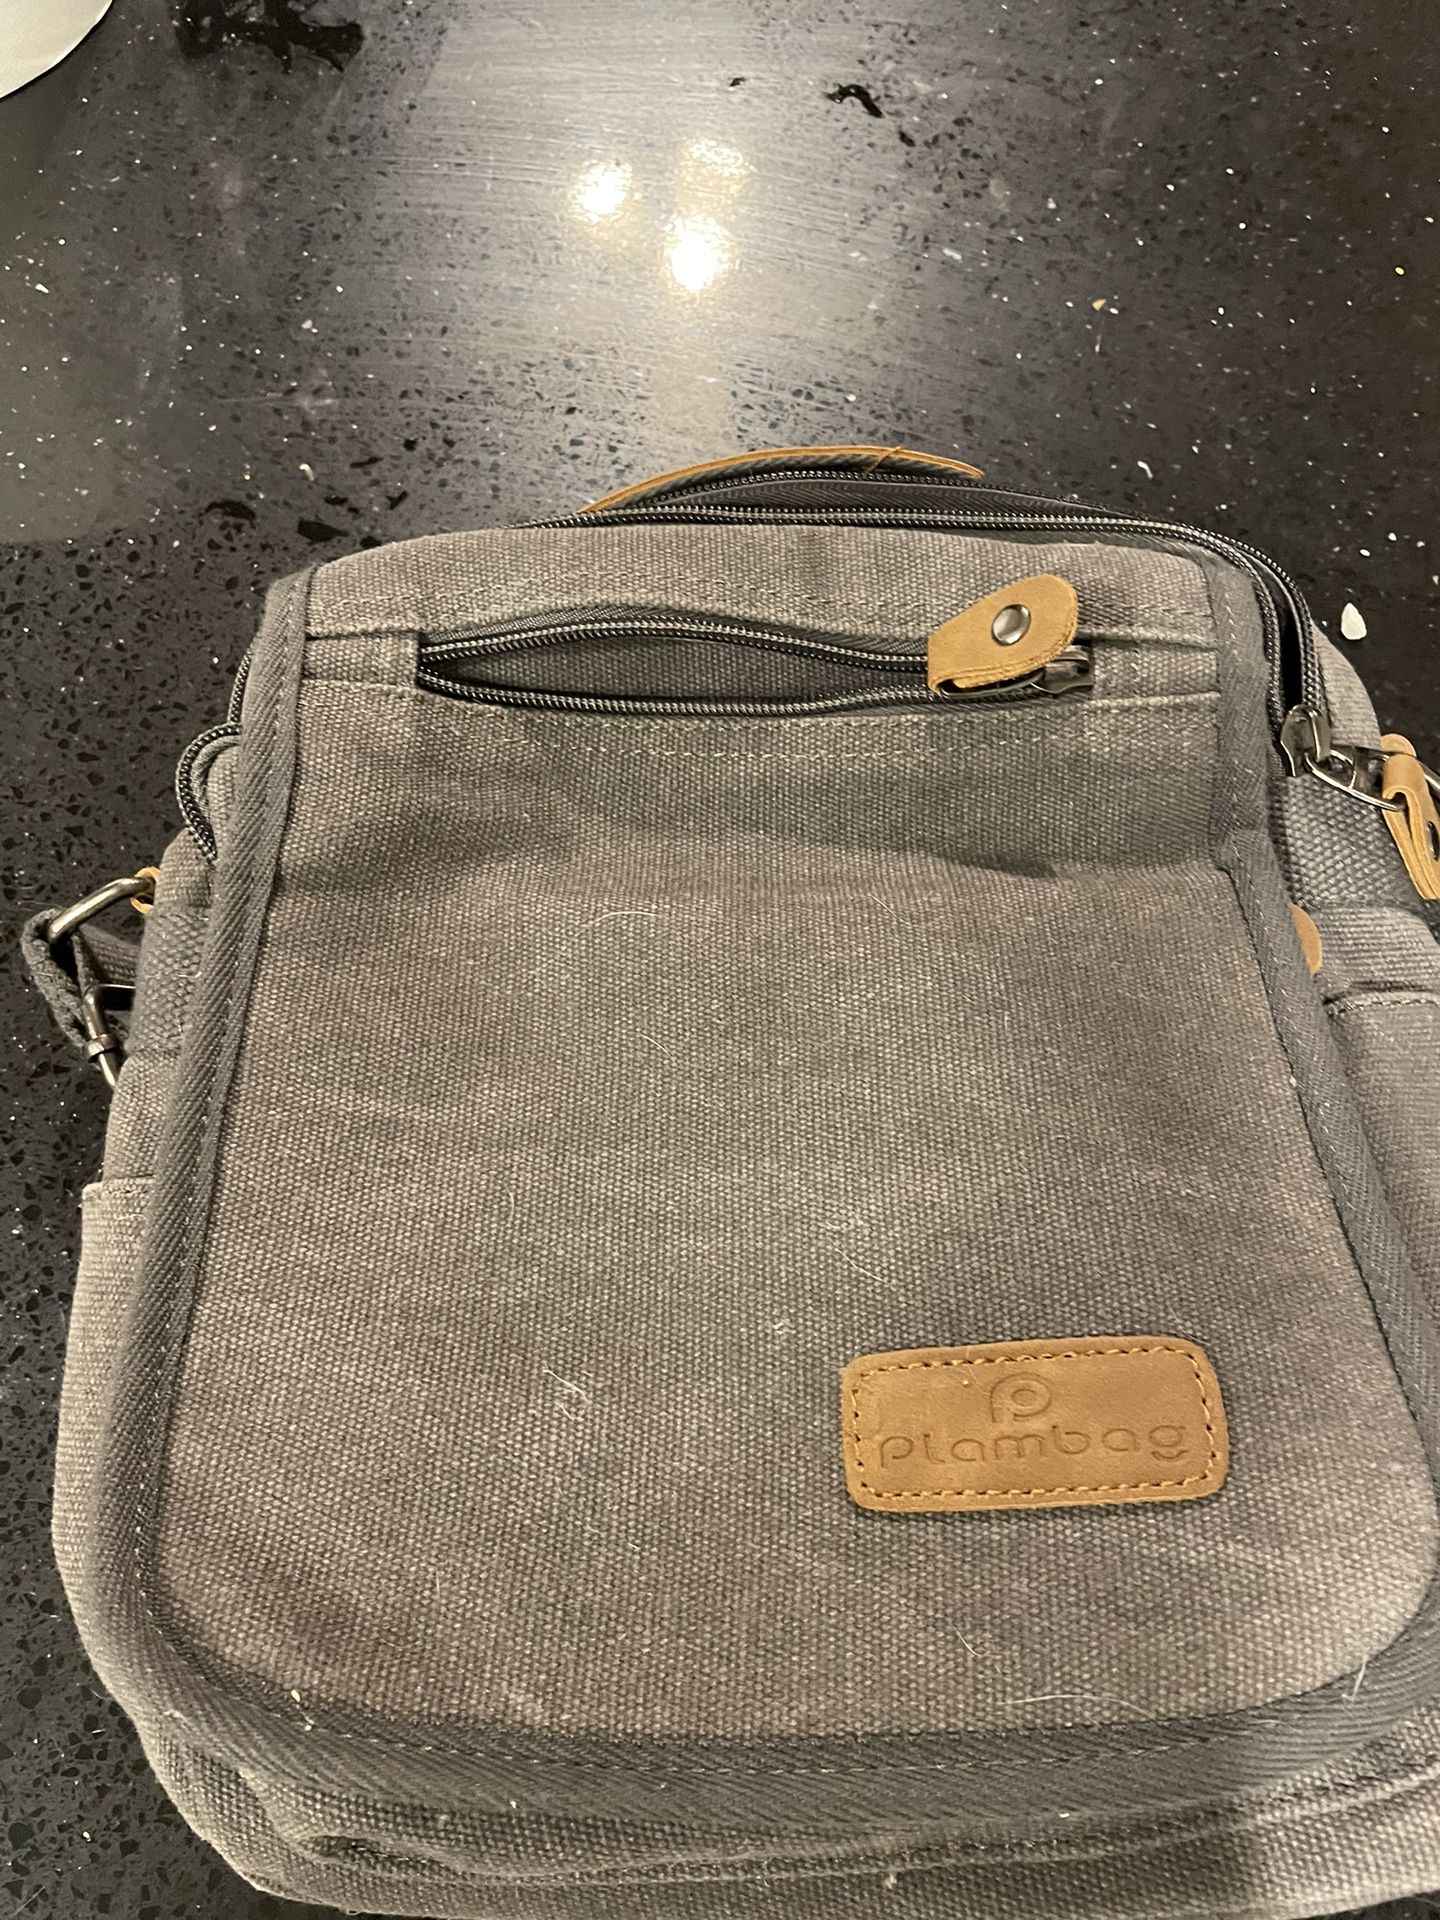 mygreen Small Canvas Crossbody Shoulder Bag Messenger Bag Work Bag